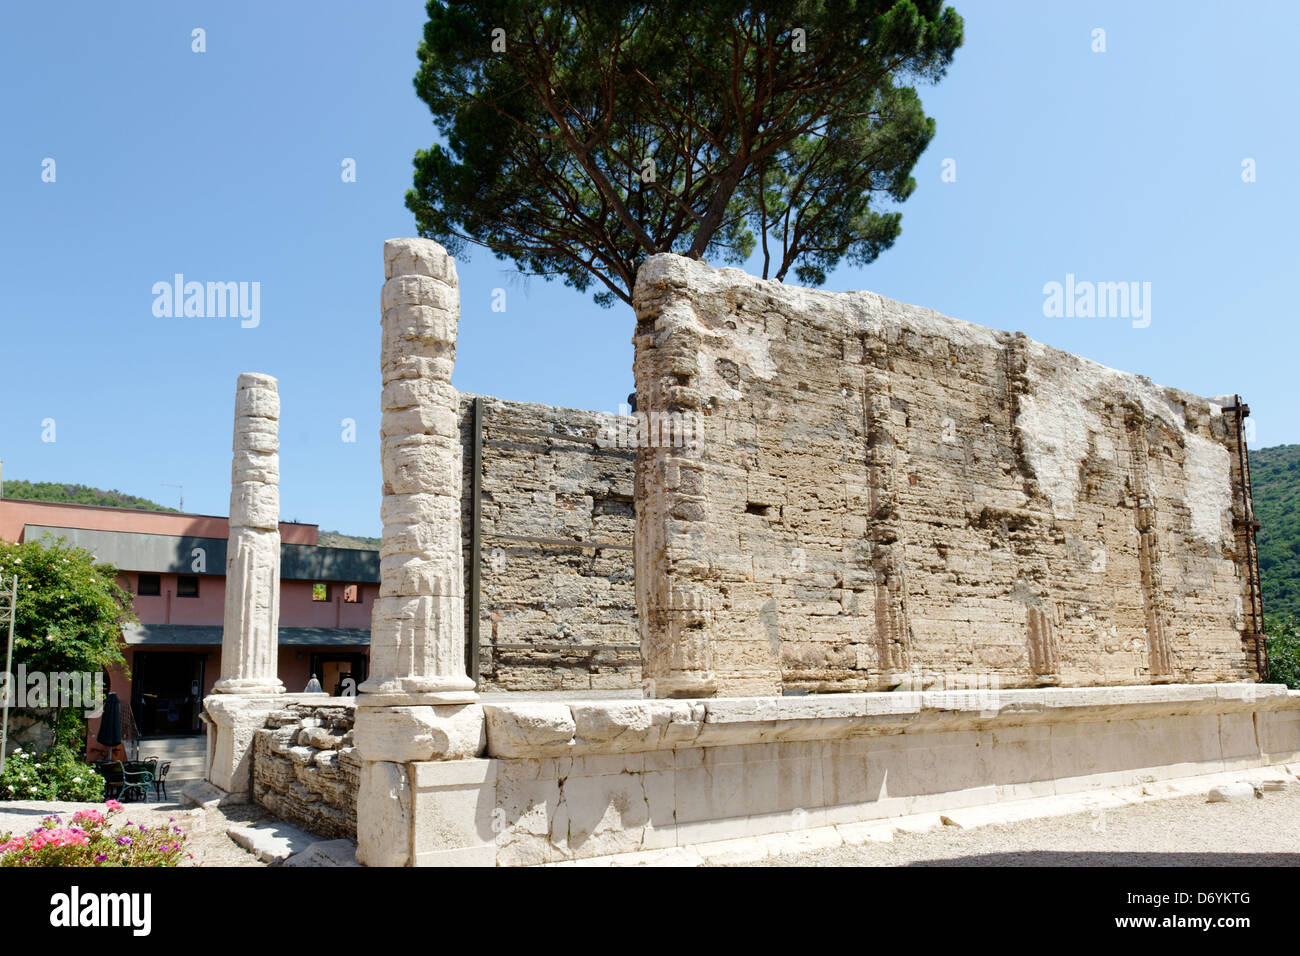 Parco Villa Gregoriana. Tivoli. Italy. View of the rectangular second century BC Roman Temple of Sybil located beside the Temple Stock Photo